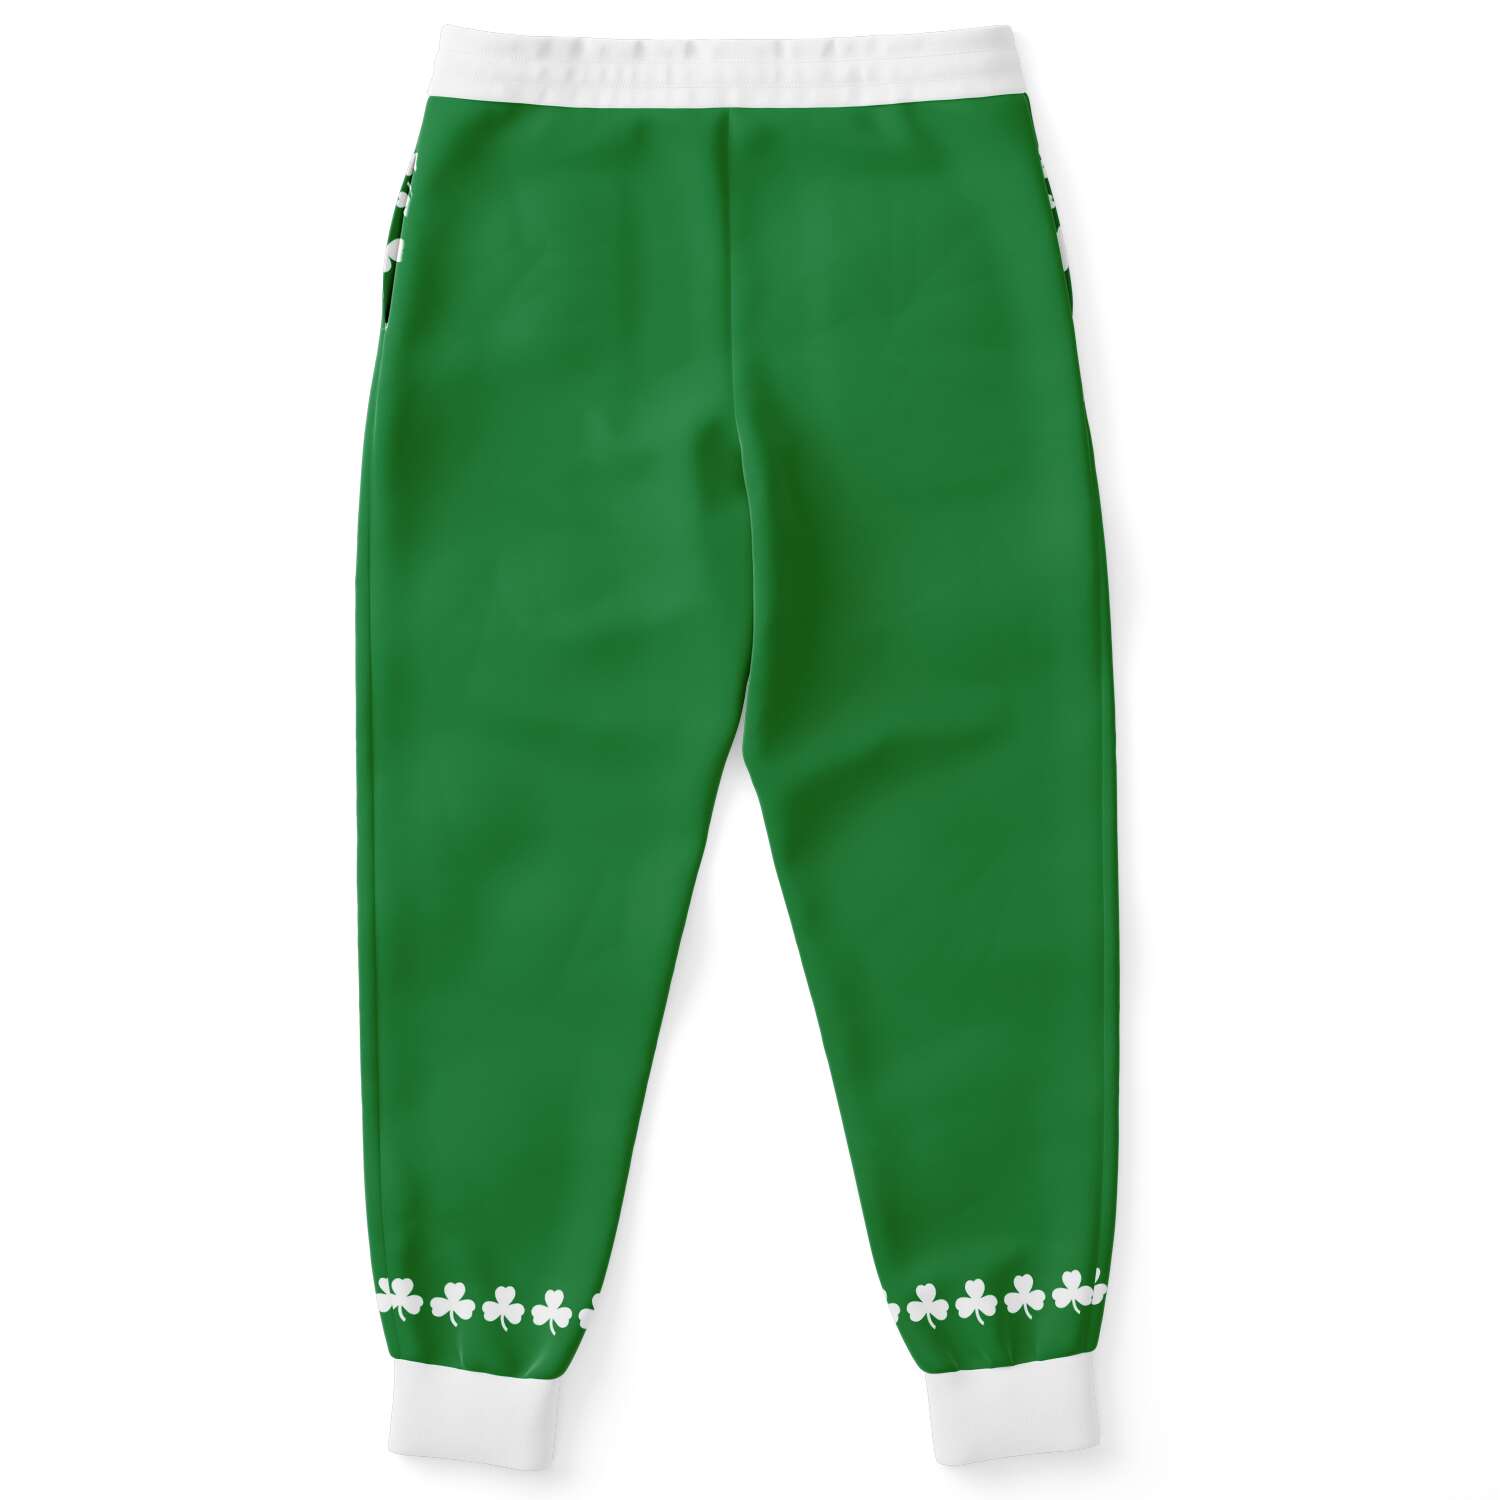 Jogger-Jayson-Tatum-Boston-Celtics-Dearbball-clothes-brand-france